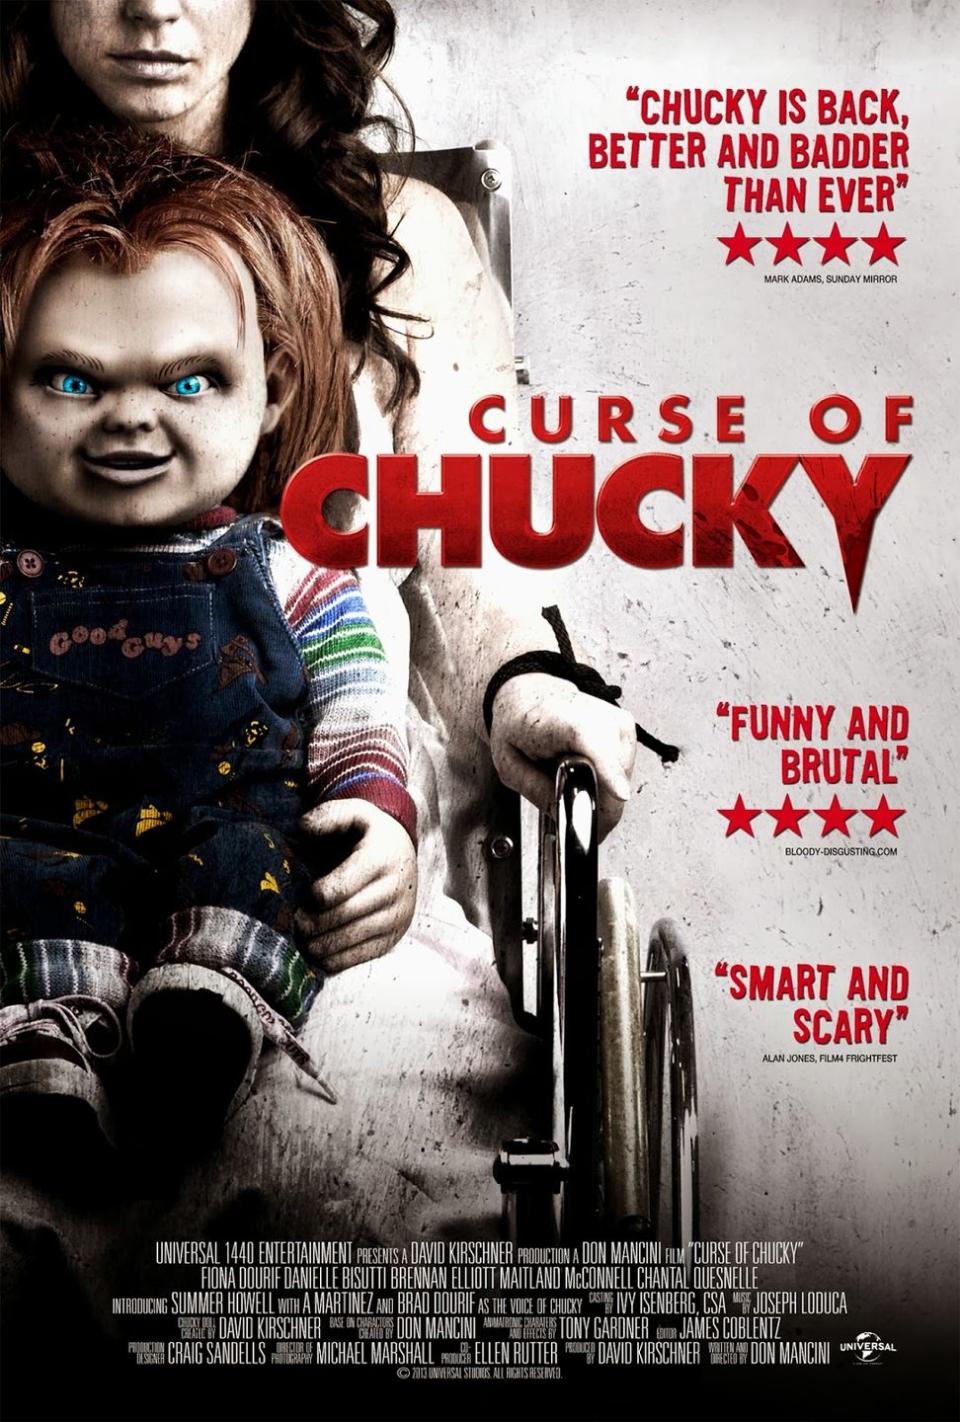 6) Curse of Chucky (2013)